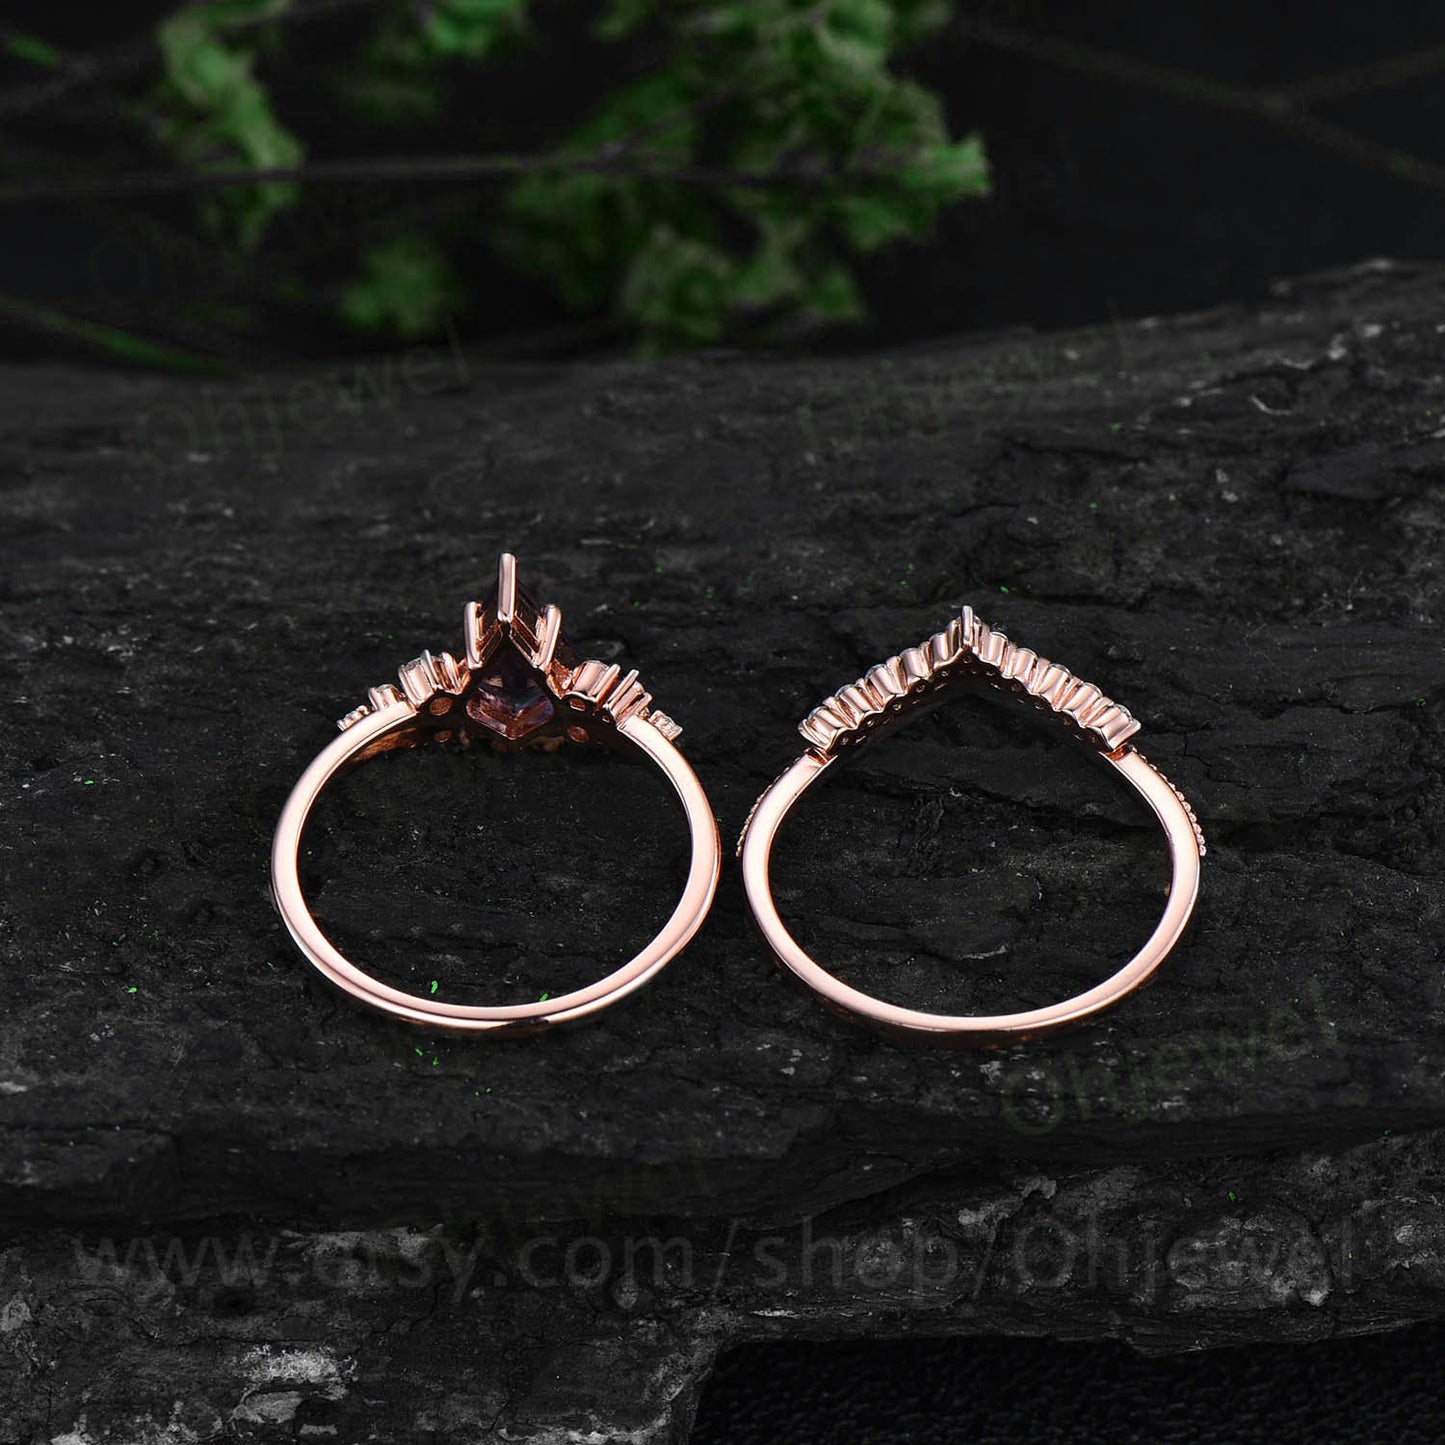 1ct kite cut pink morganite engagement ring set rose gold unique snowdrift engagement ring for women round diamond ring antique bridal set